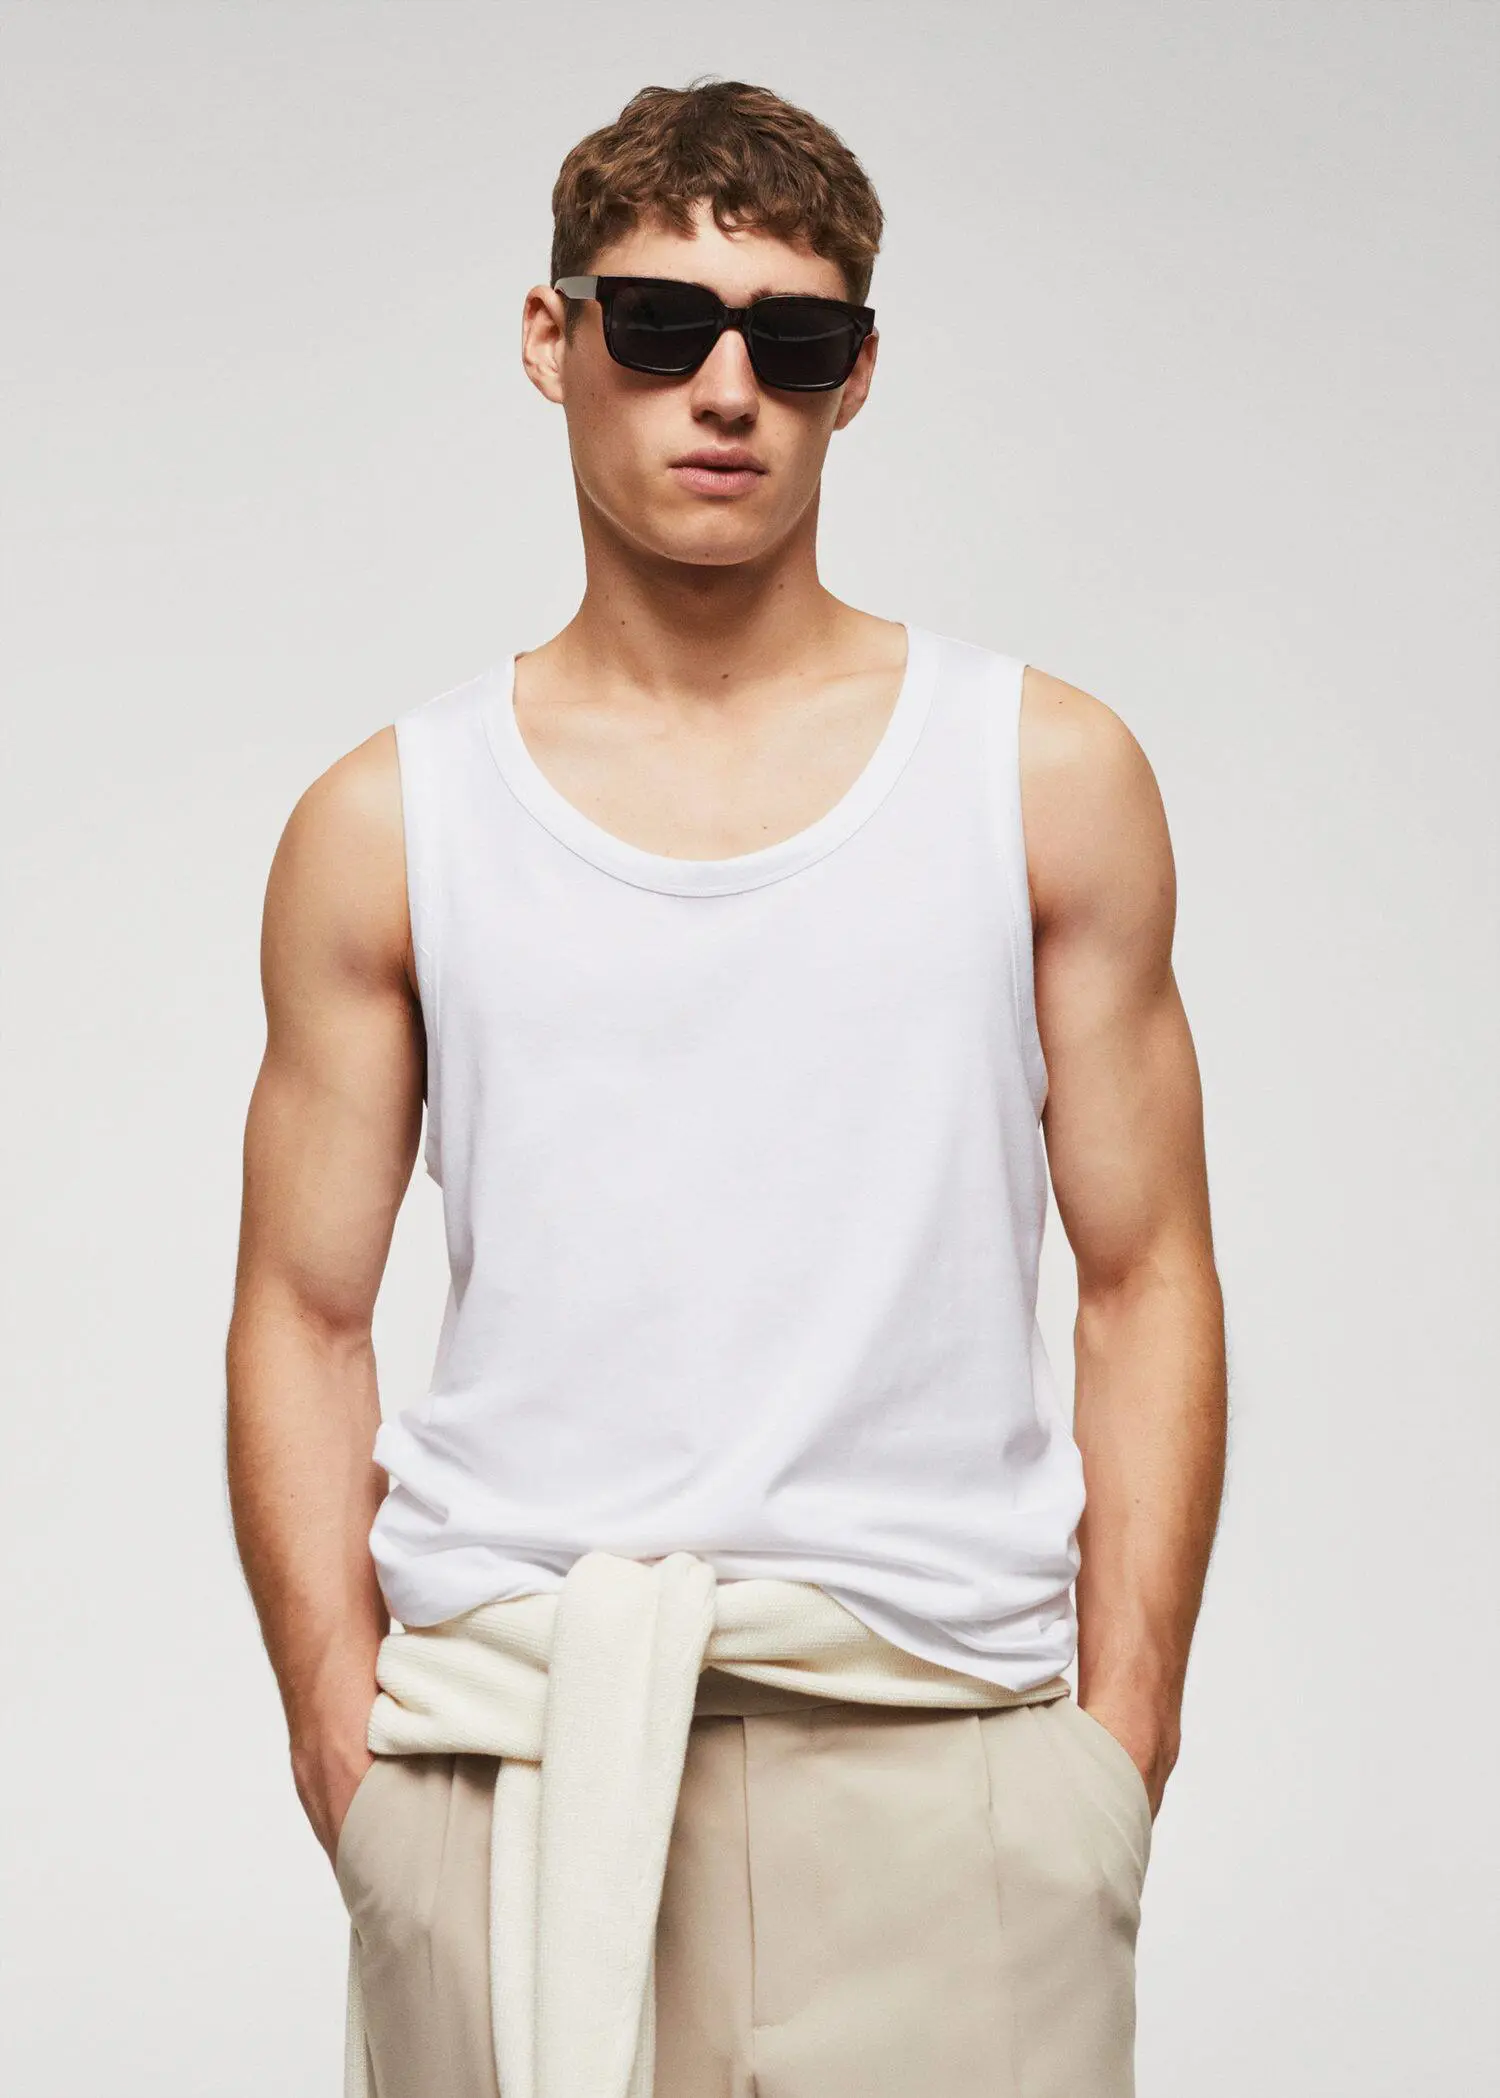 Mango Strap cotton T-shirt. a man wearing a white tank top and sunglasses. 